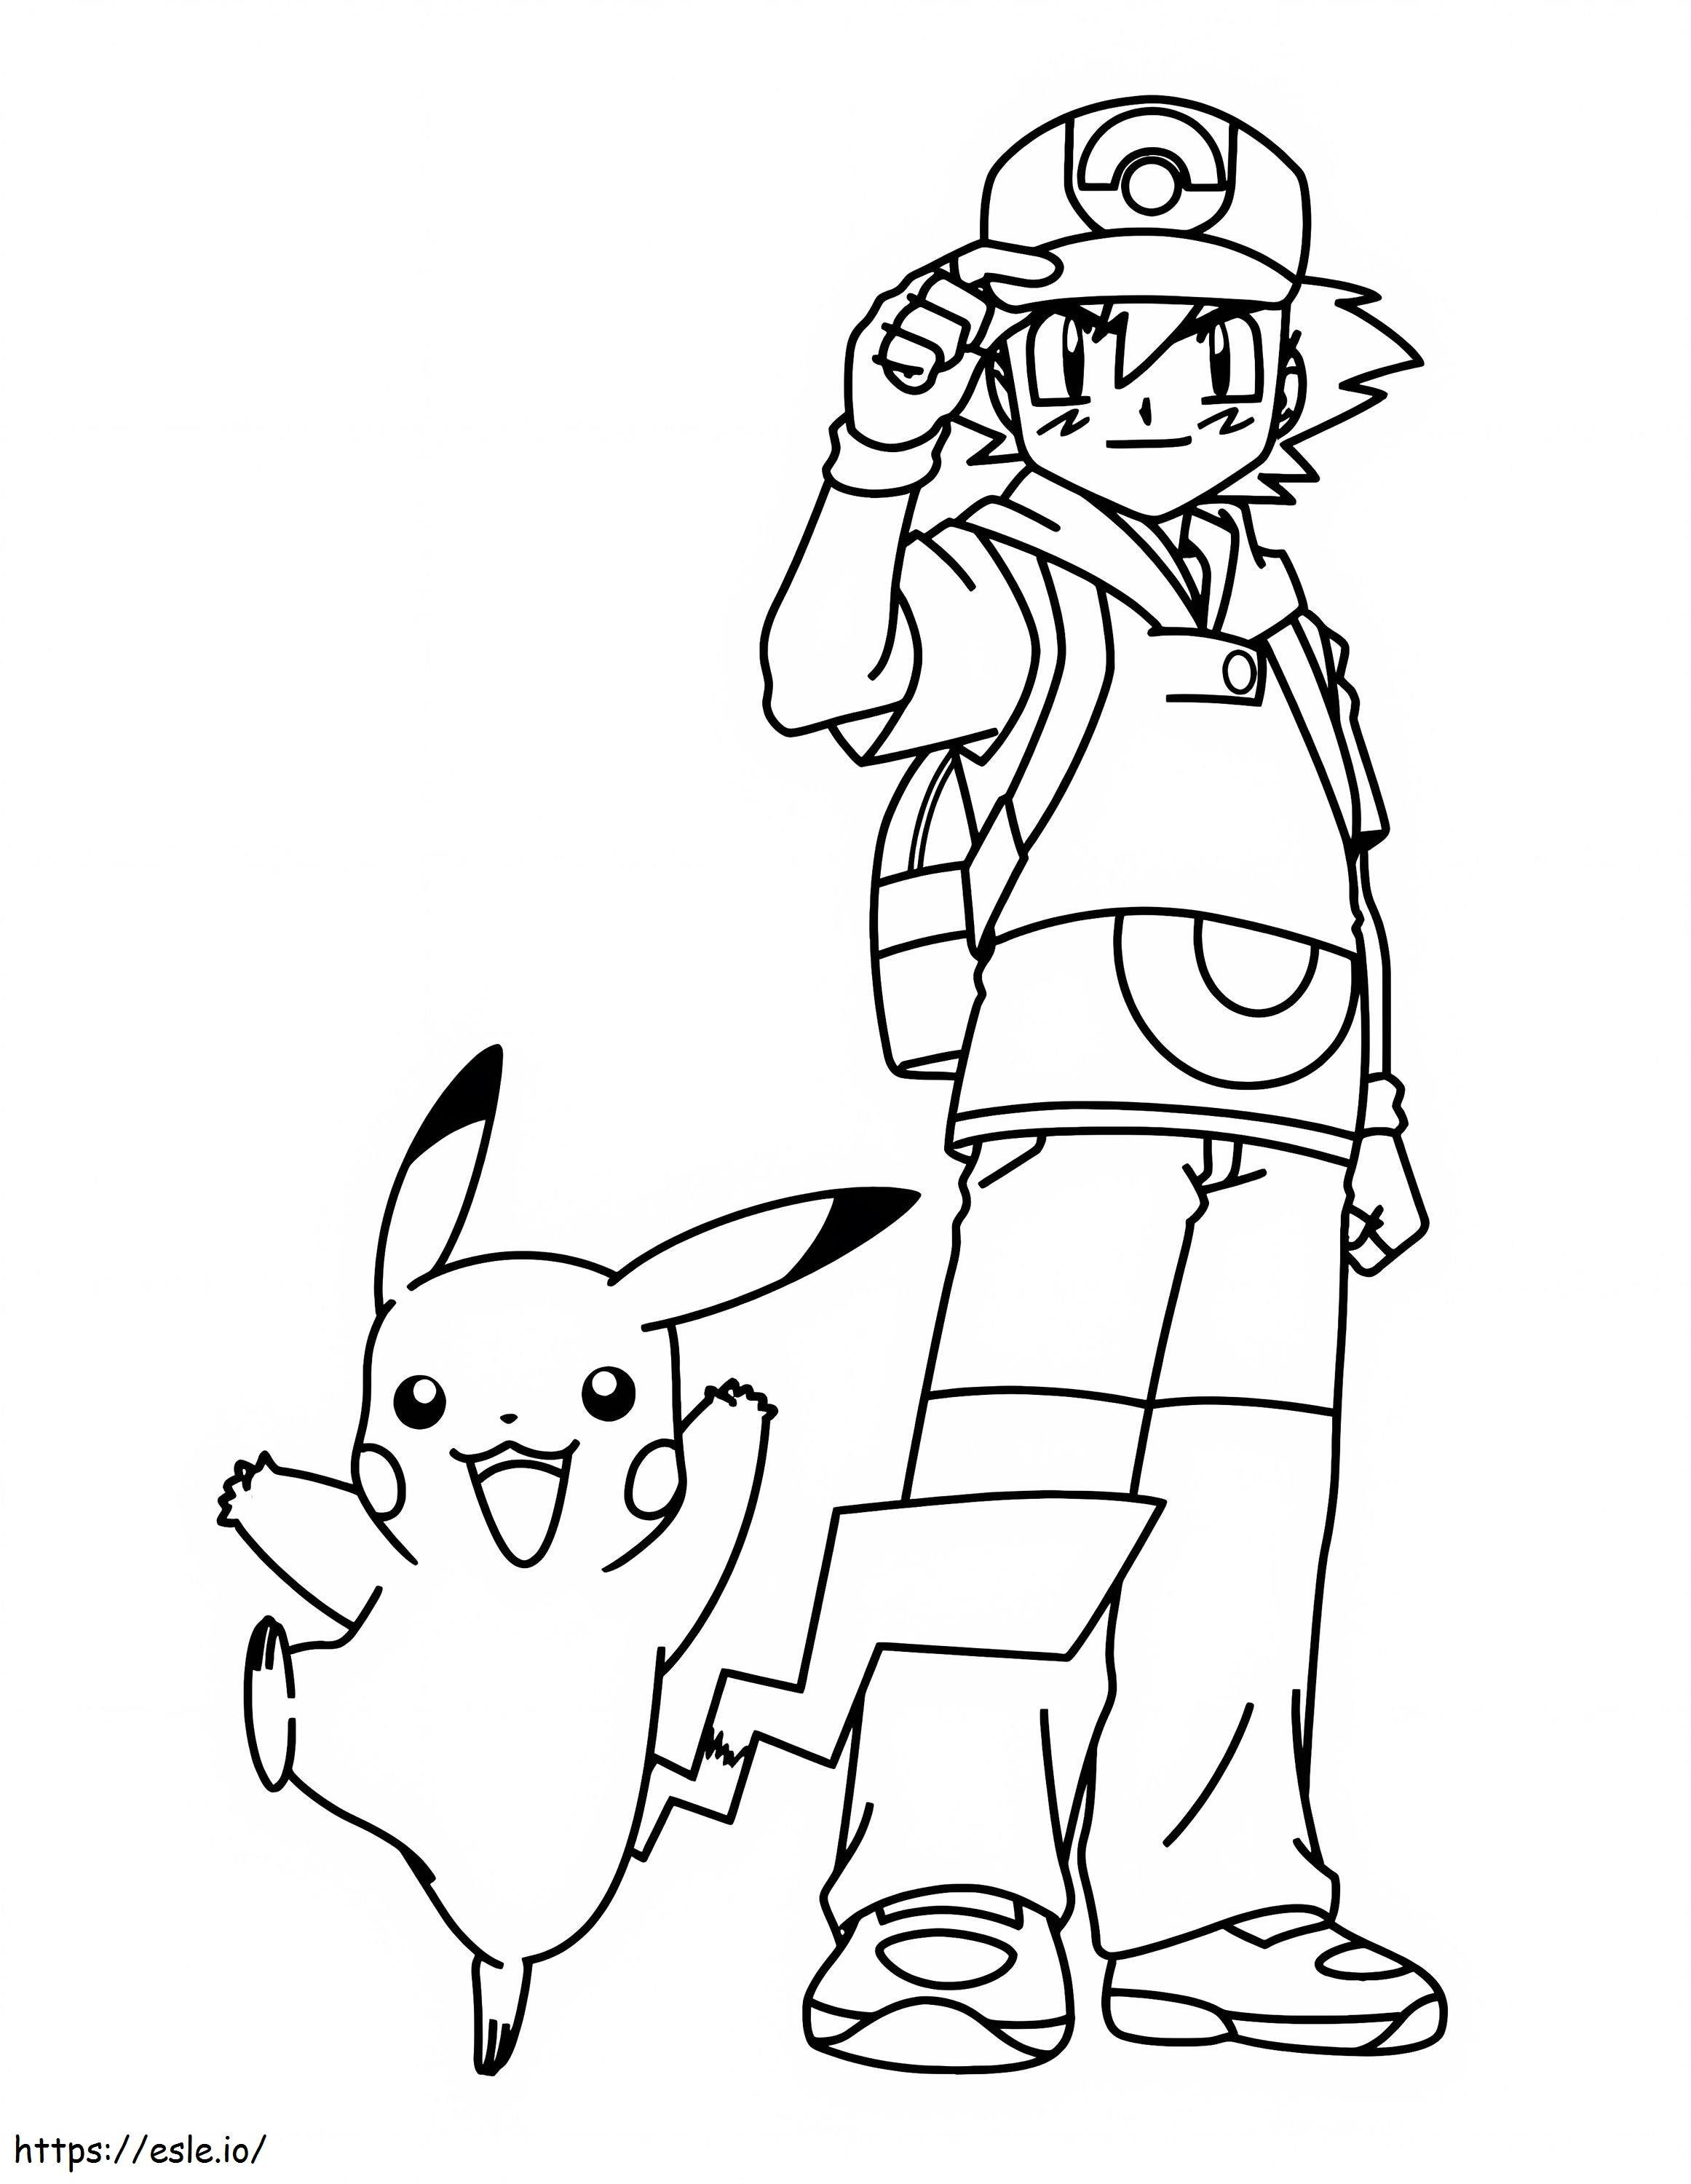 Feliz Pikachu e Ash Ketchum para colorir